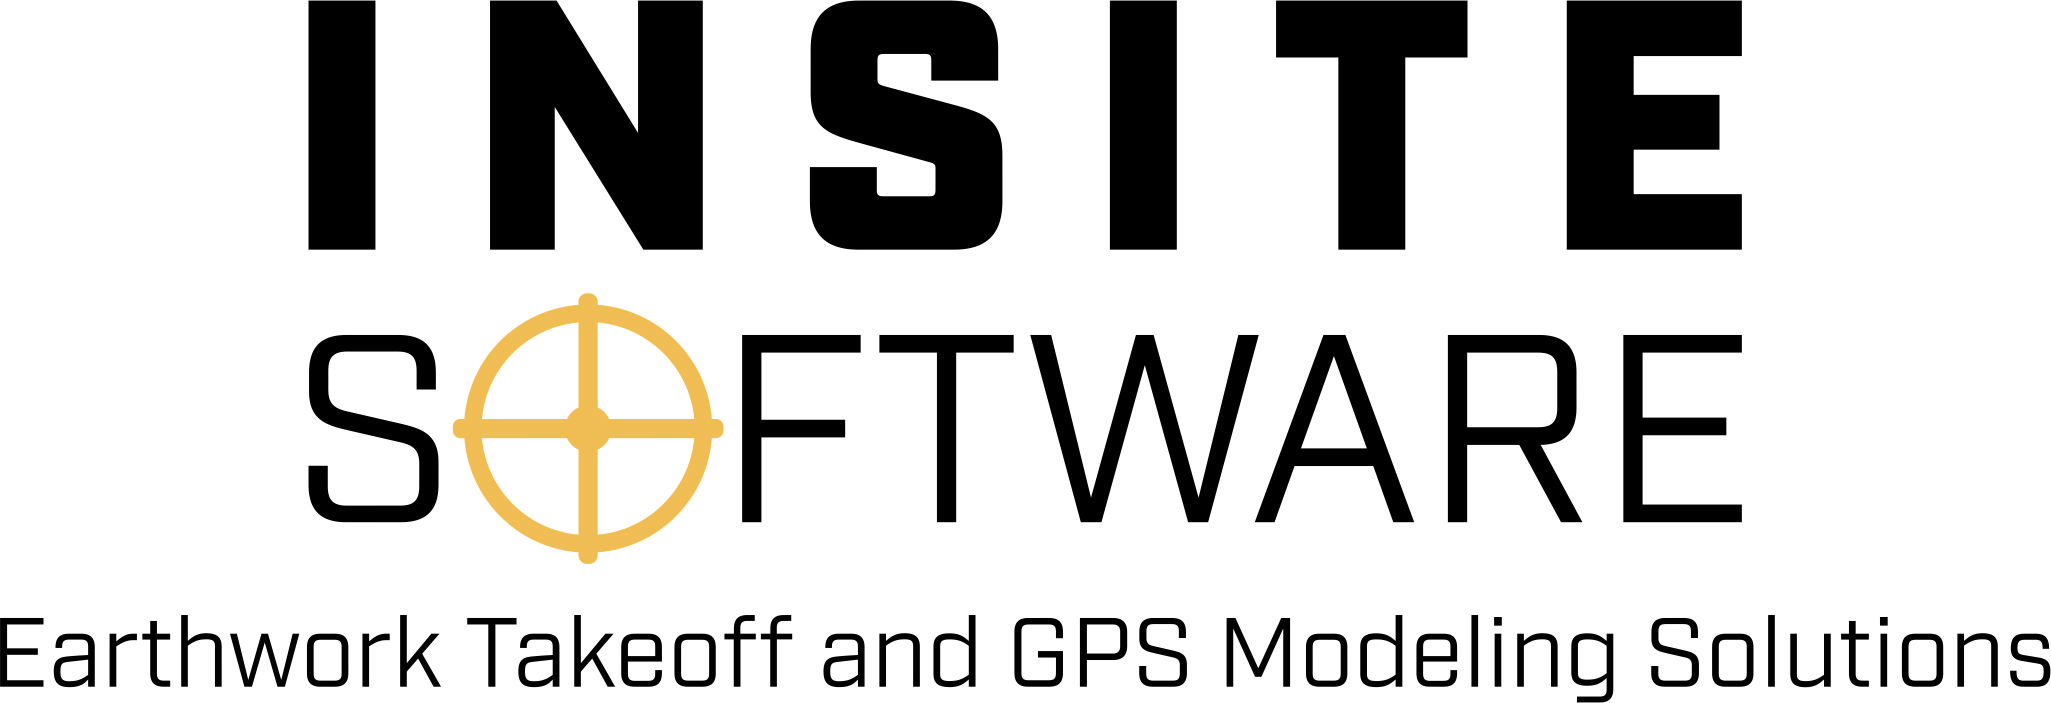 InSite Software Logo with Tagline 